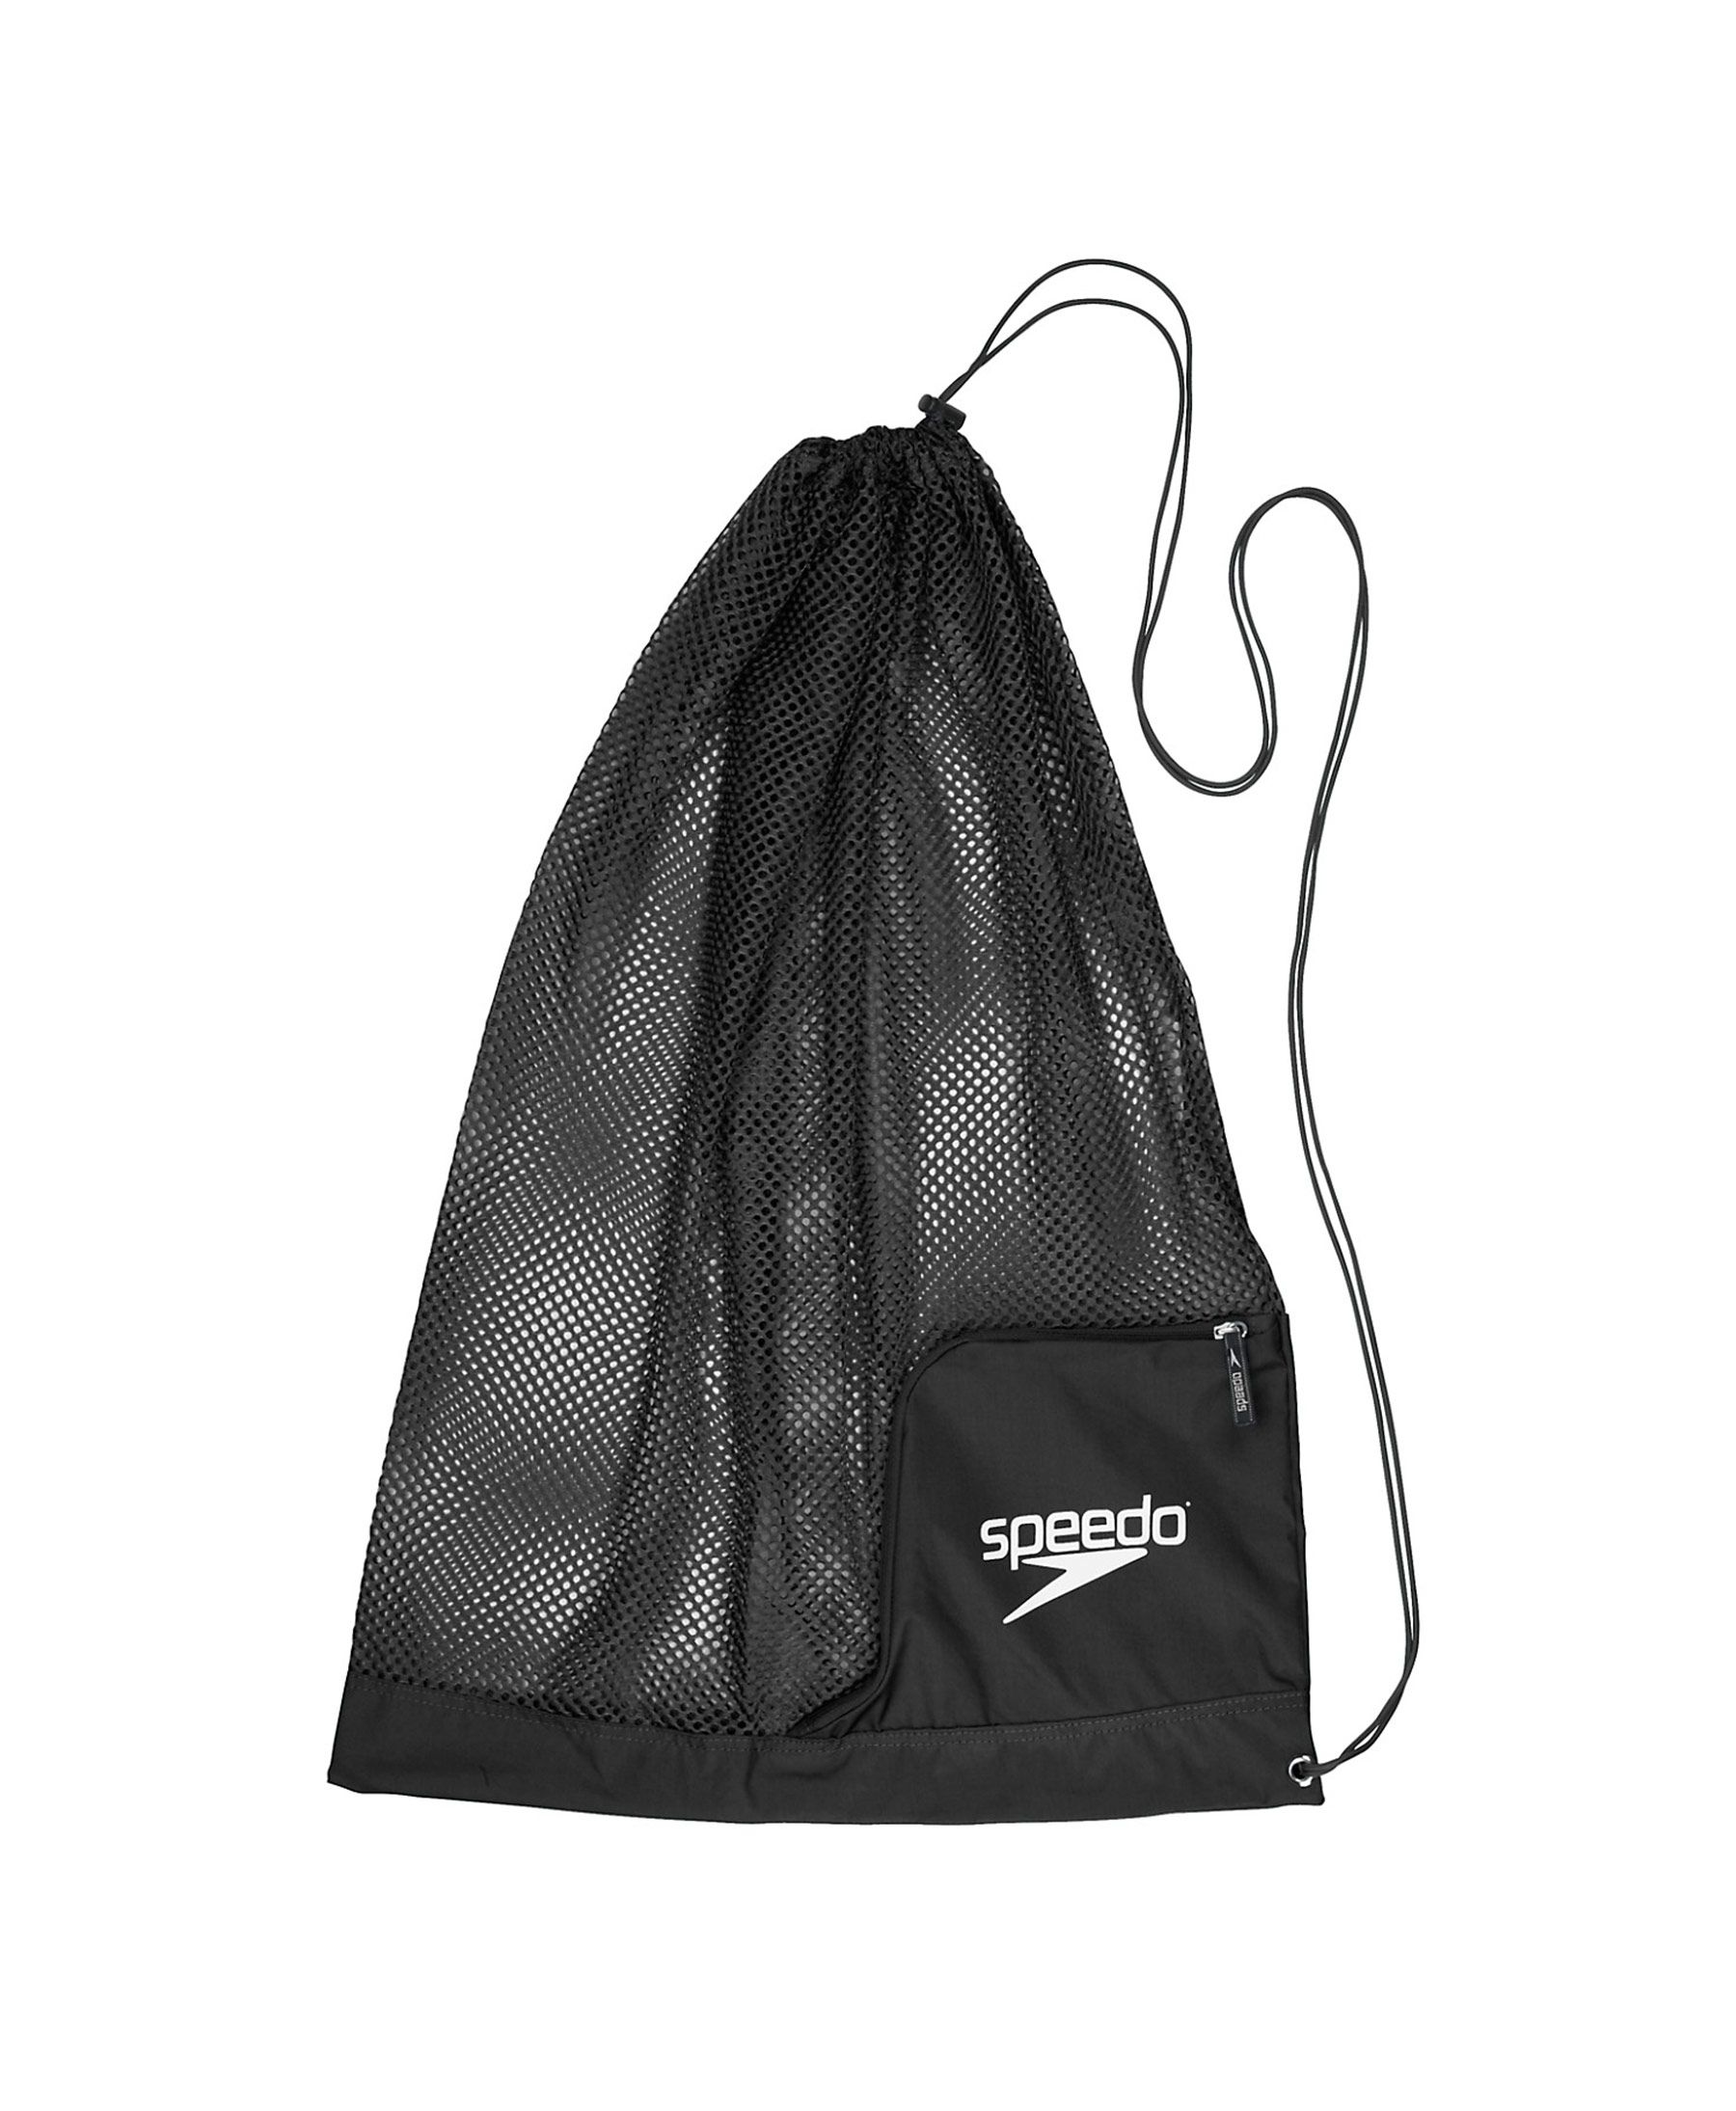 Speedo Mesh Equipment Bag